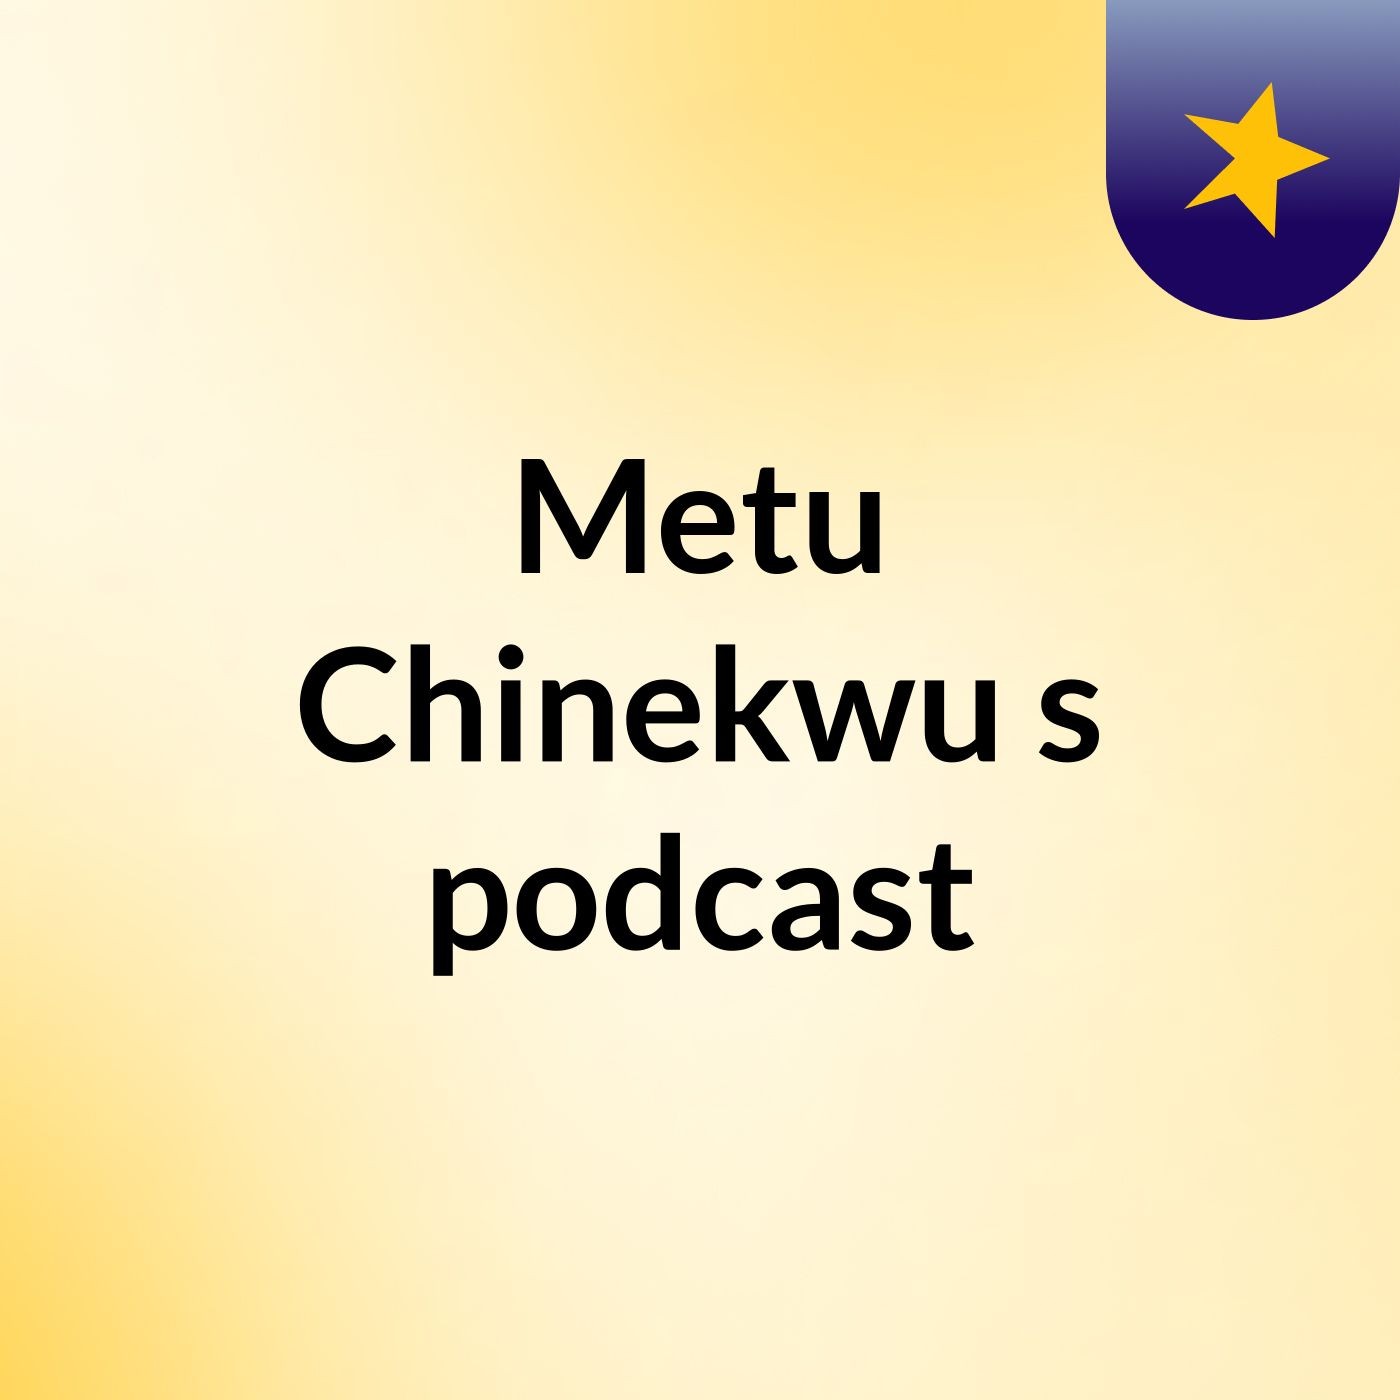 Episode 2 - Metu Chinekwu's podcast